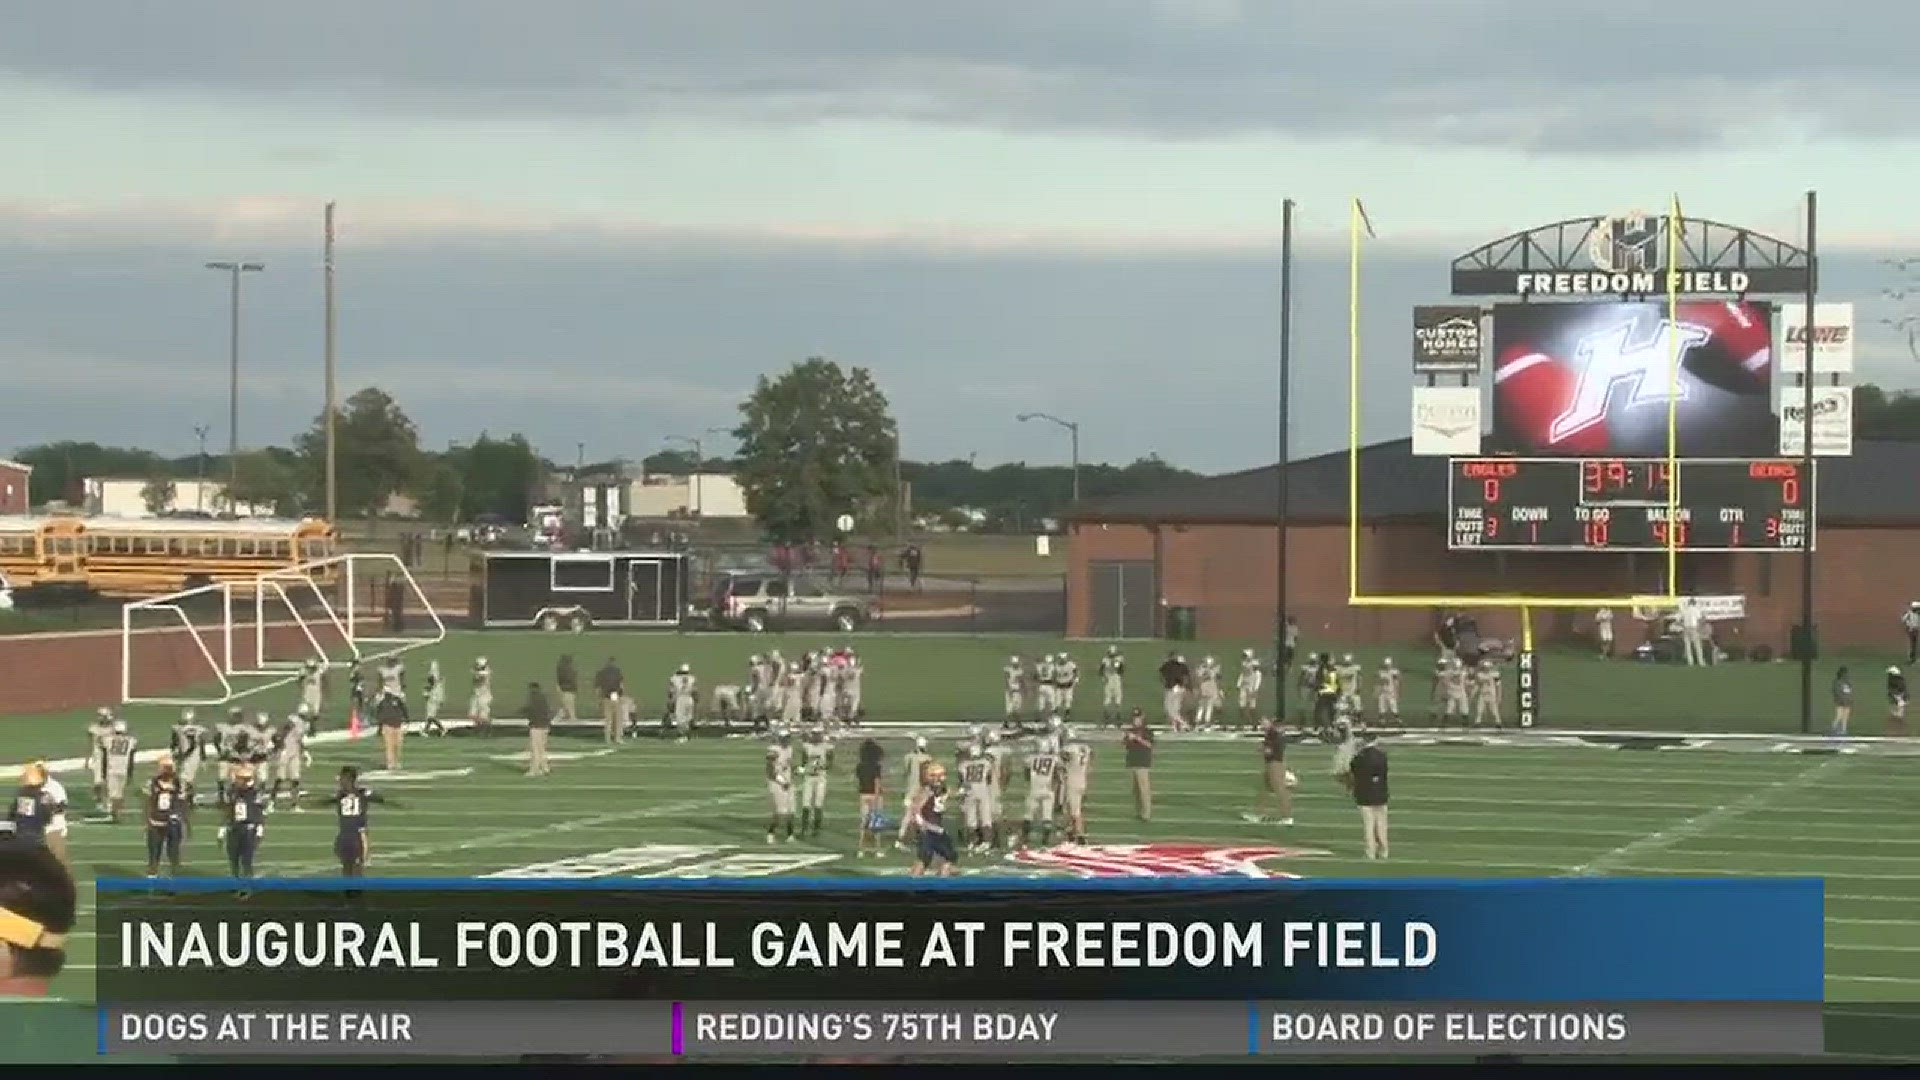 Freedom Field has inaugural football game